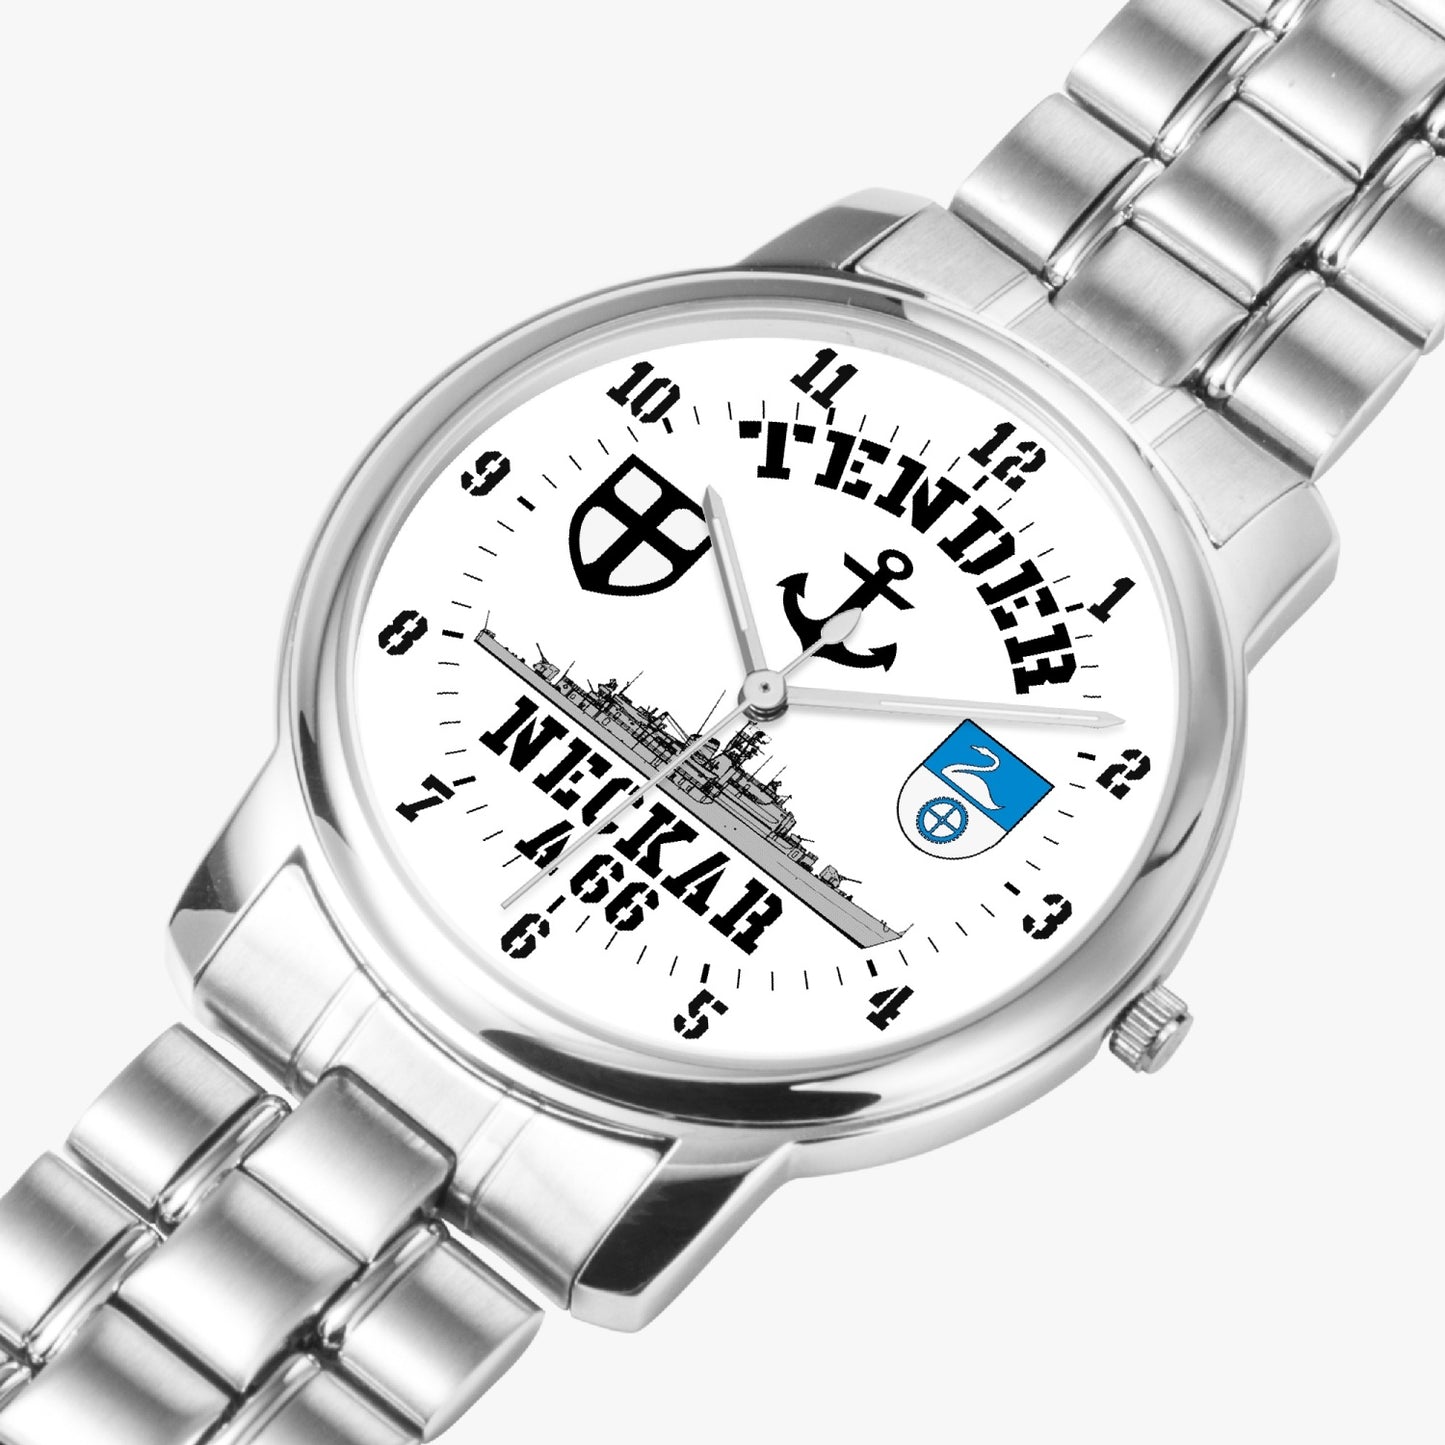 Armbanduhr Tender A66 NECKAR